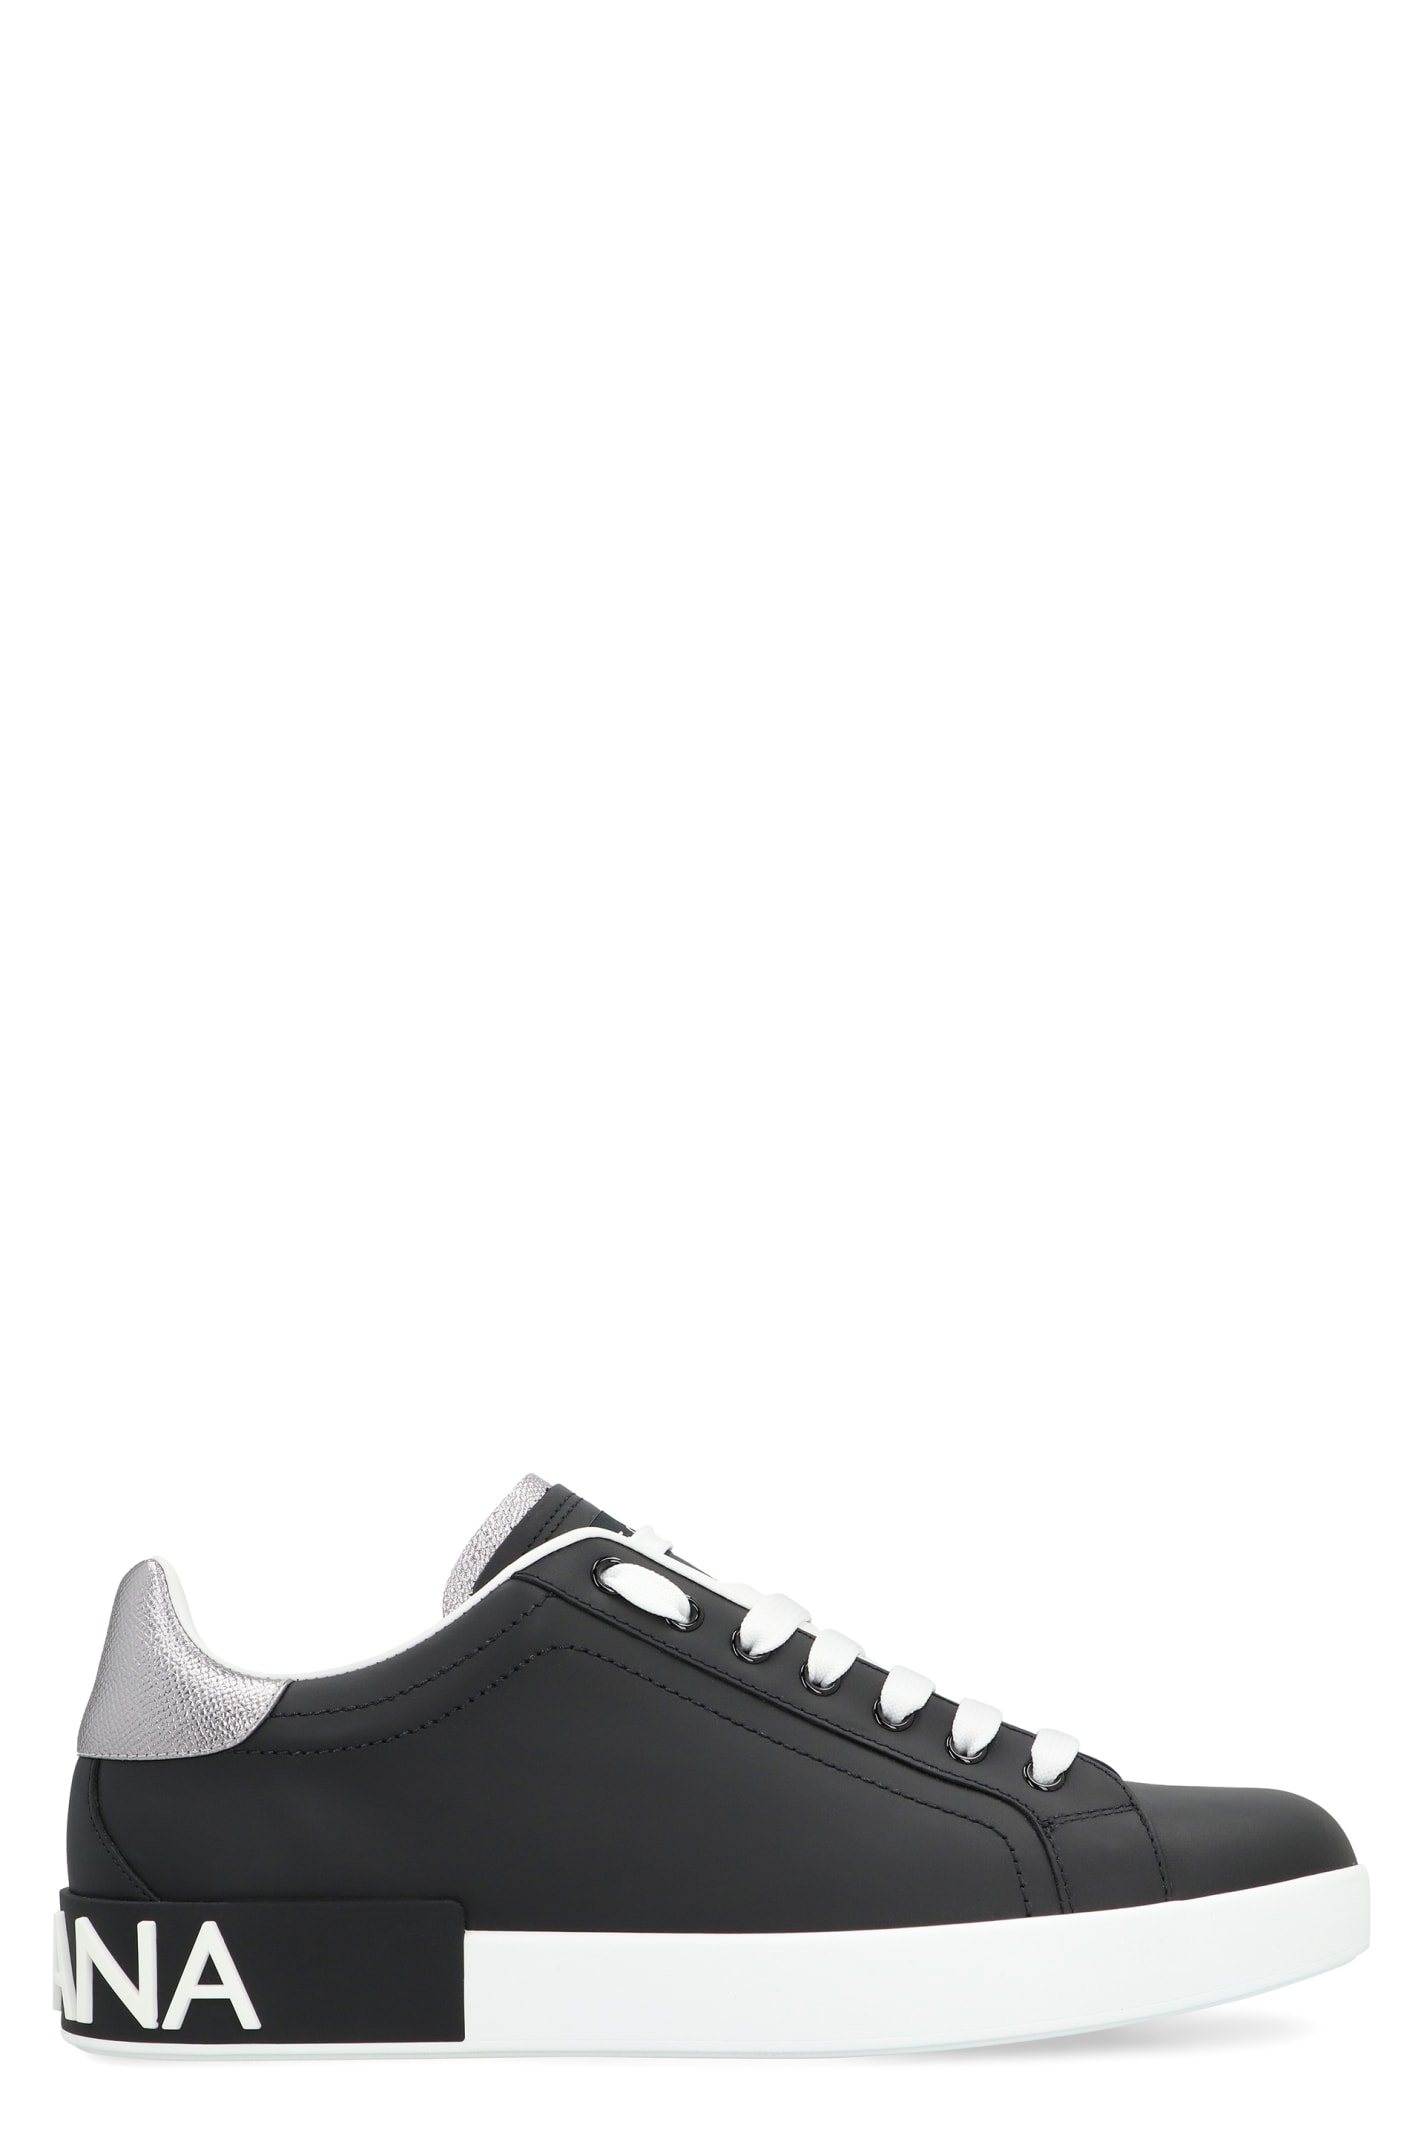 Dolce & Gabbana Portofino Spoiler Leather Low-top Sneakers In Black